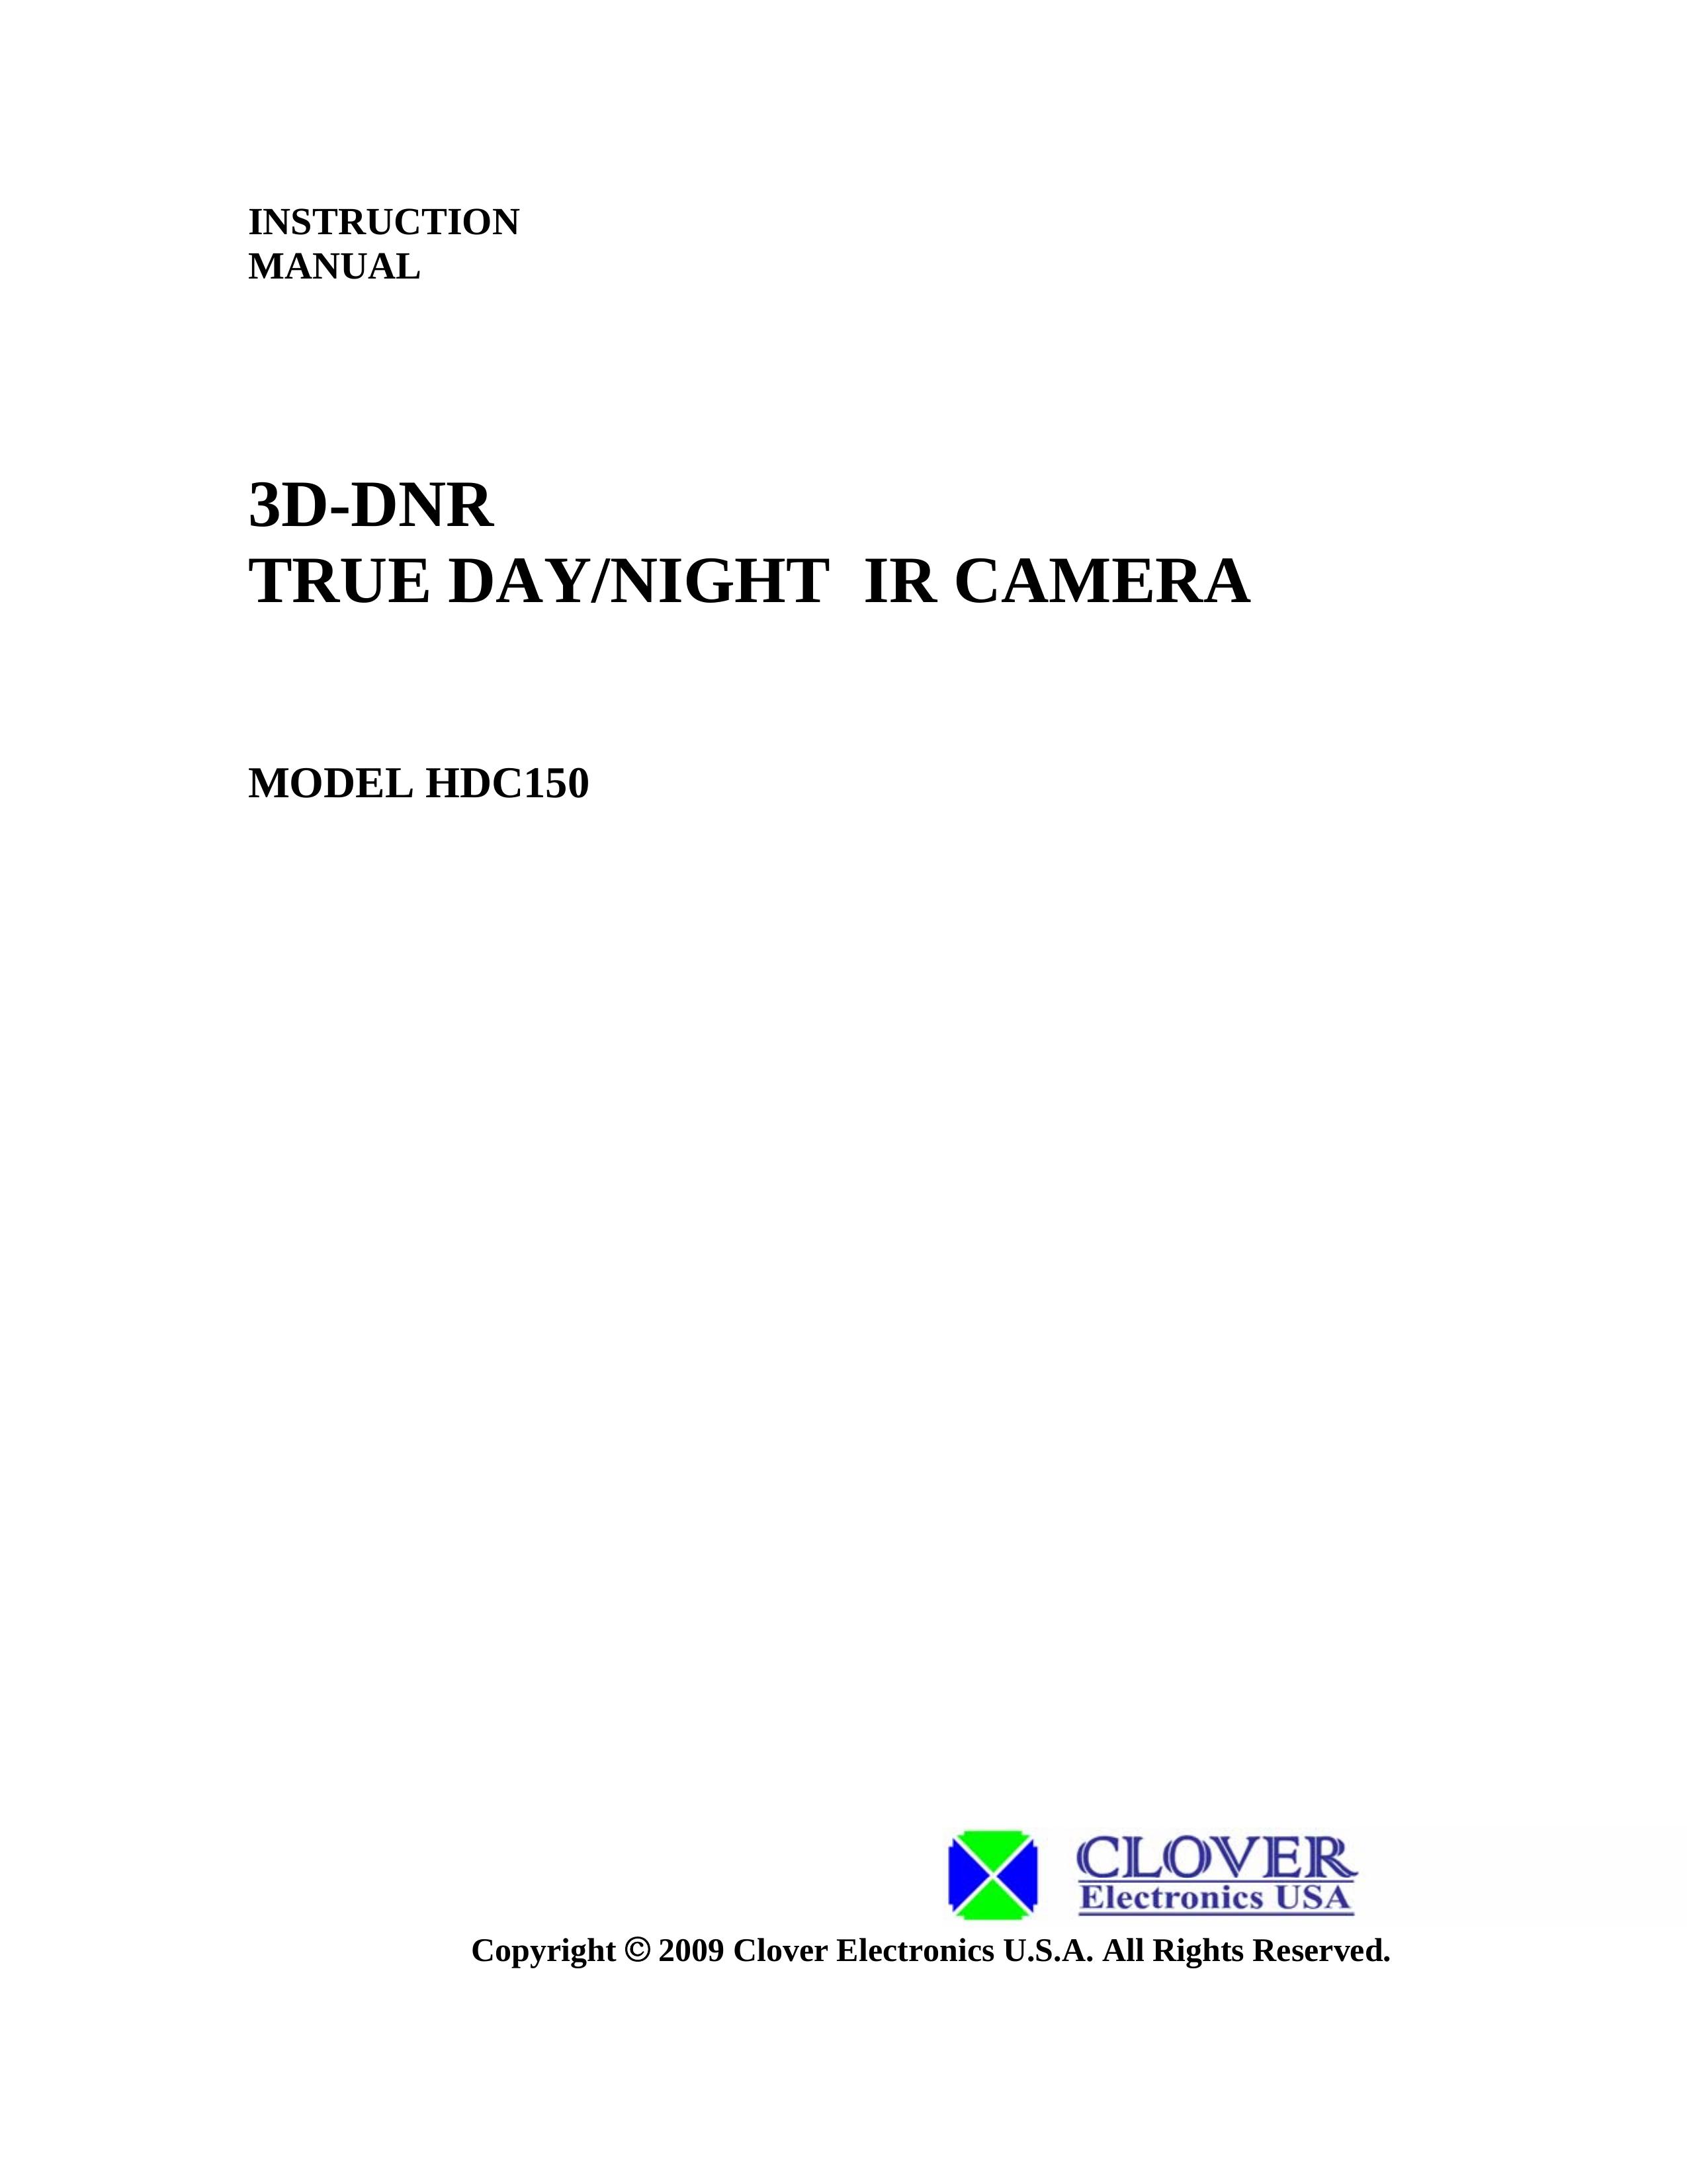 Clover Electronics HDC150 Digital Camera User Manual